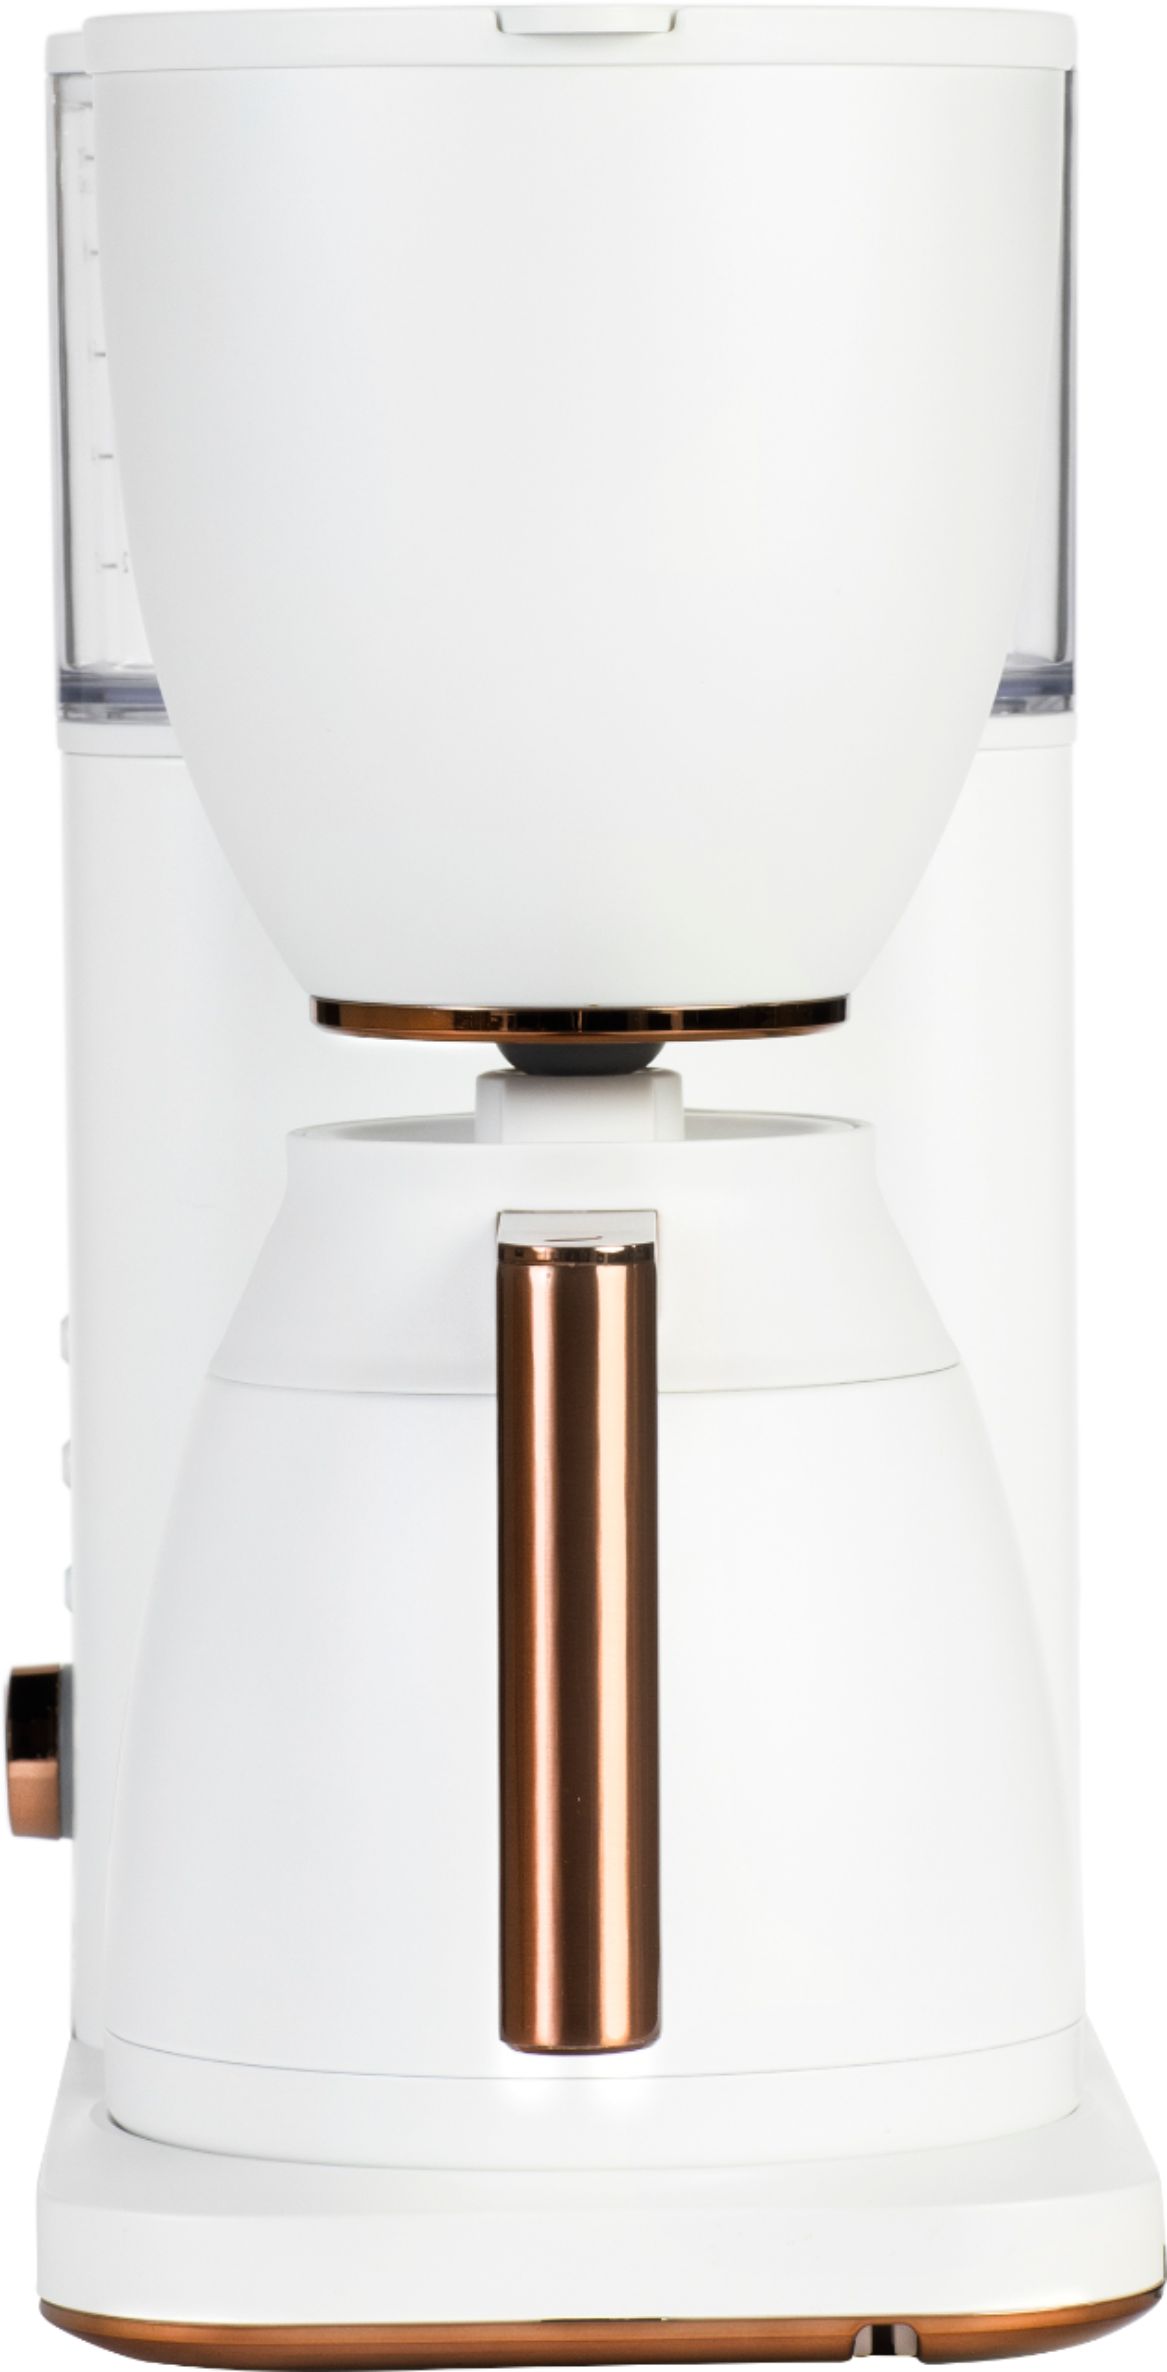 Single-Serve Coffee Maker (white)-49978